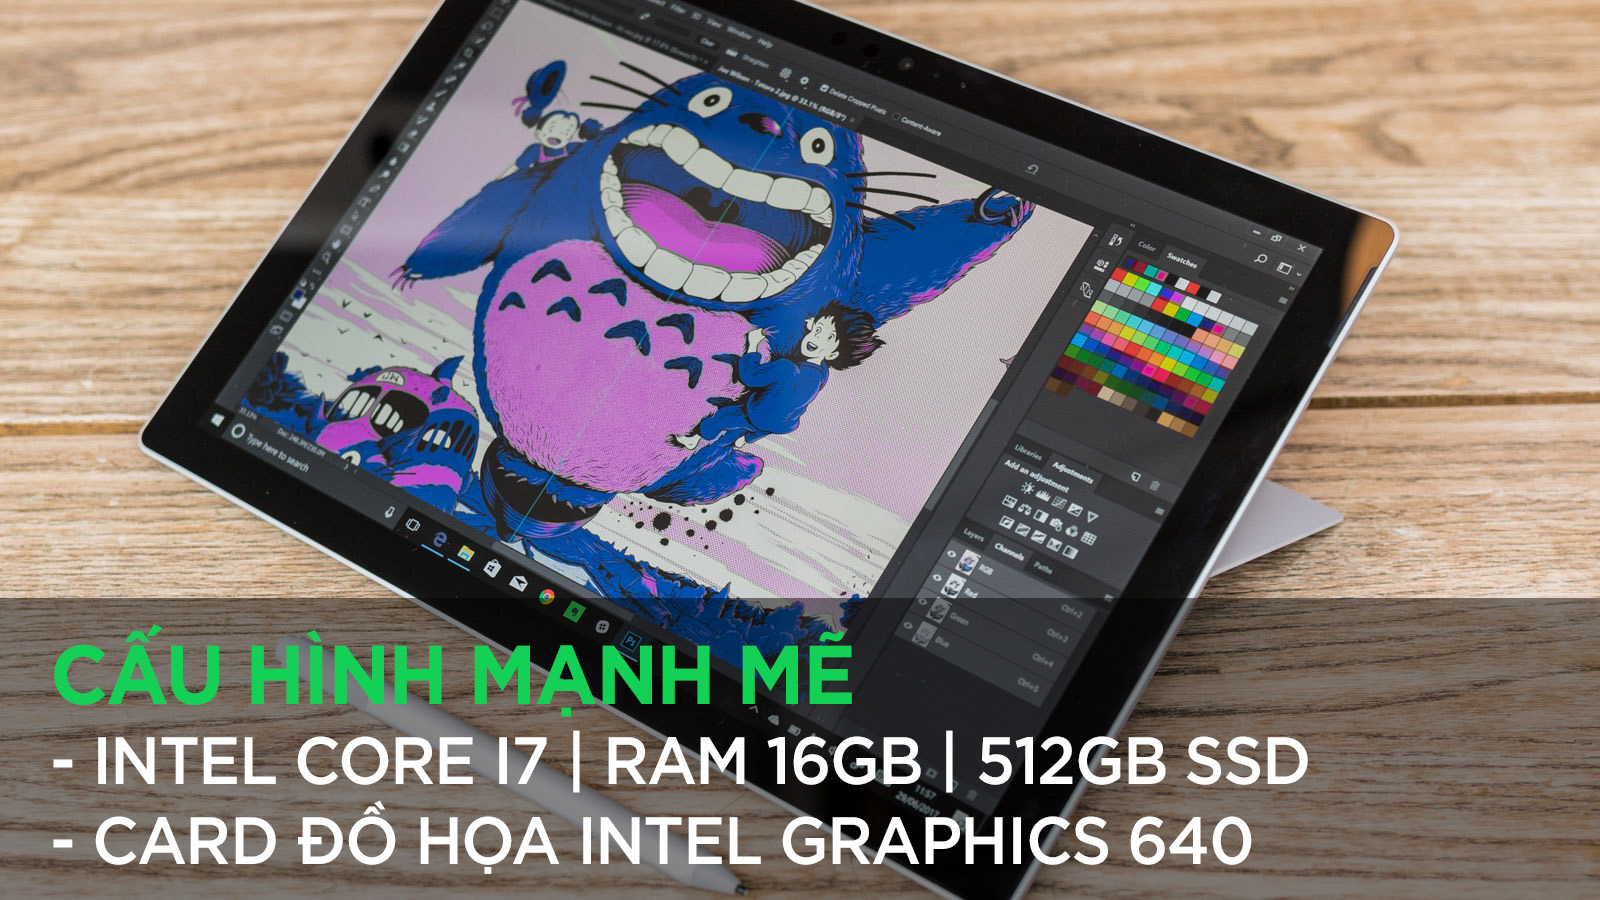 Surface Pro 2017 - 512 GB / Intel Core i7 / 16GB RAM